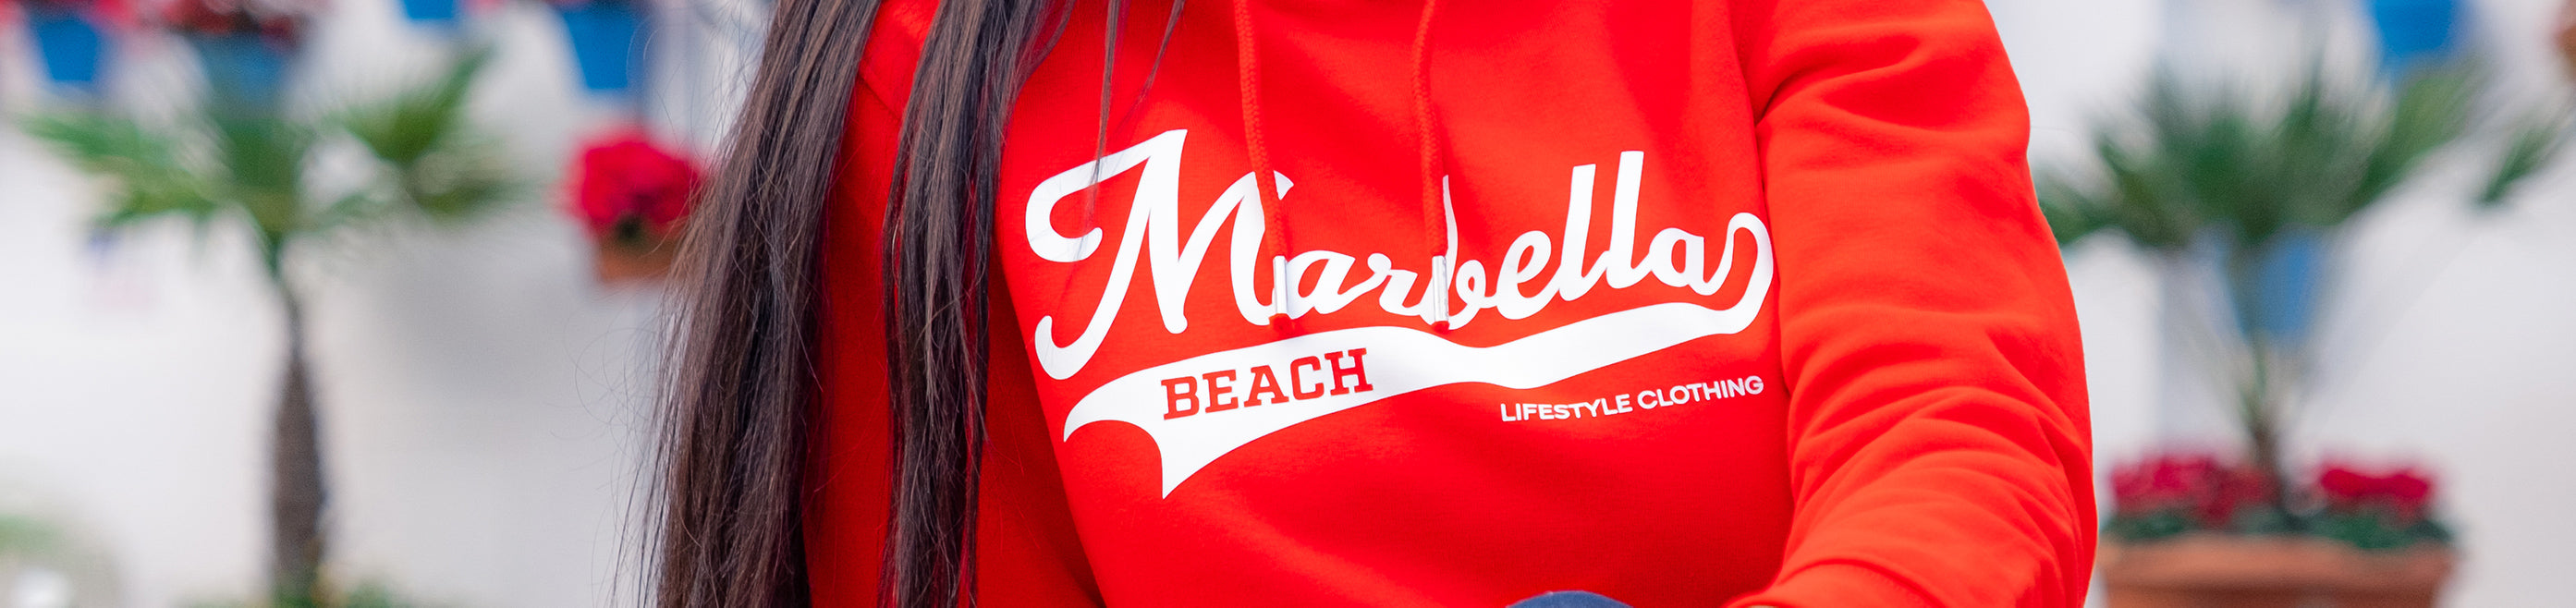 Marbella Beach Brand Lifestyle Clothing